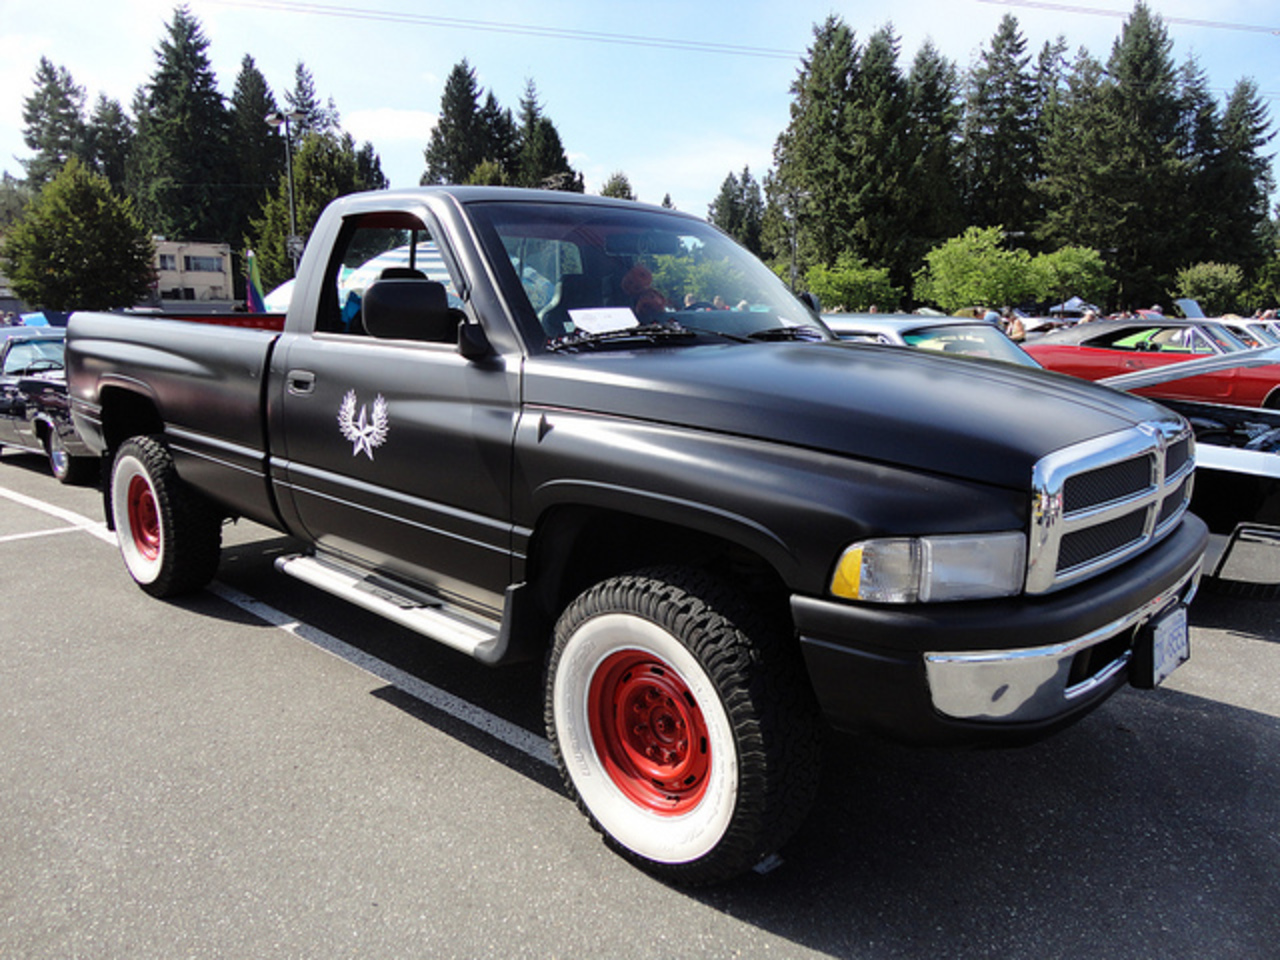 1996 Dodge Ram 2500 Pickup Truck | Flickr - Photo Sharing!